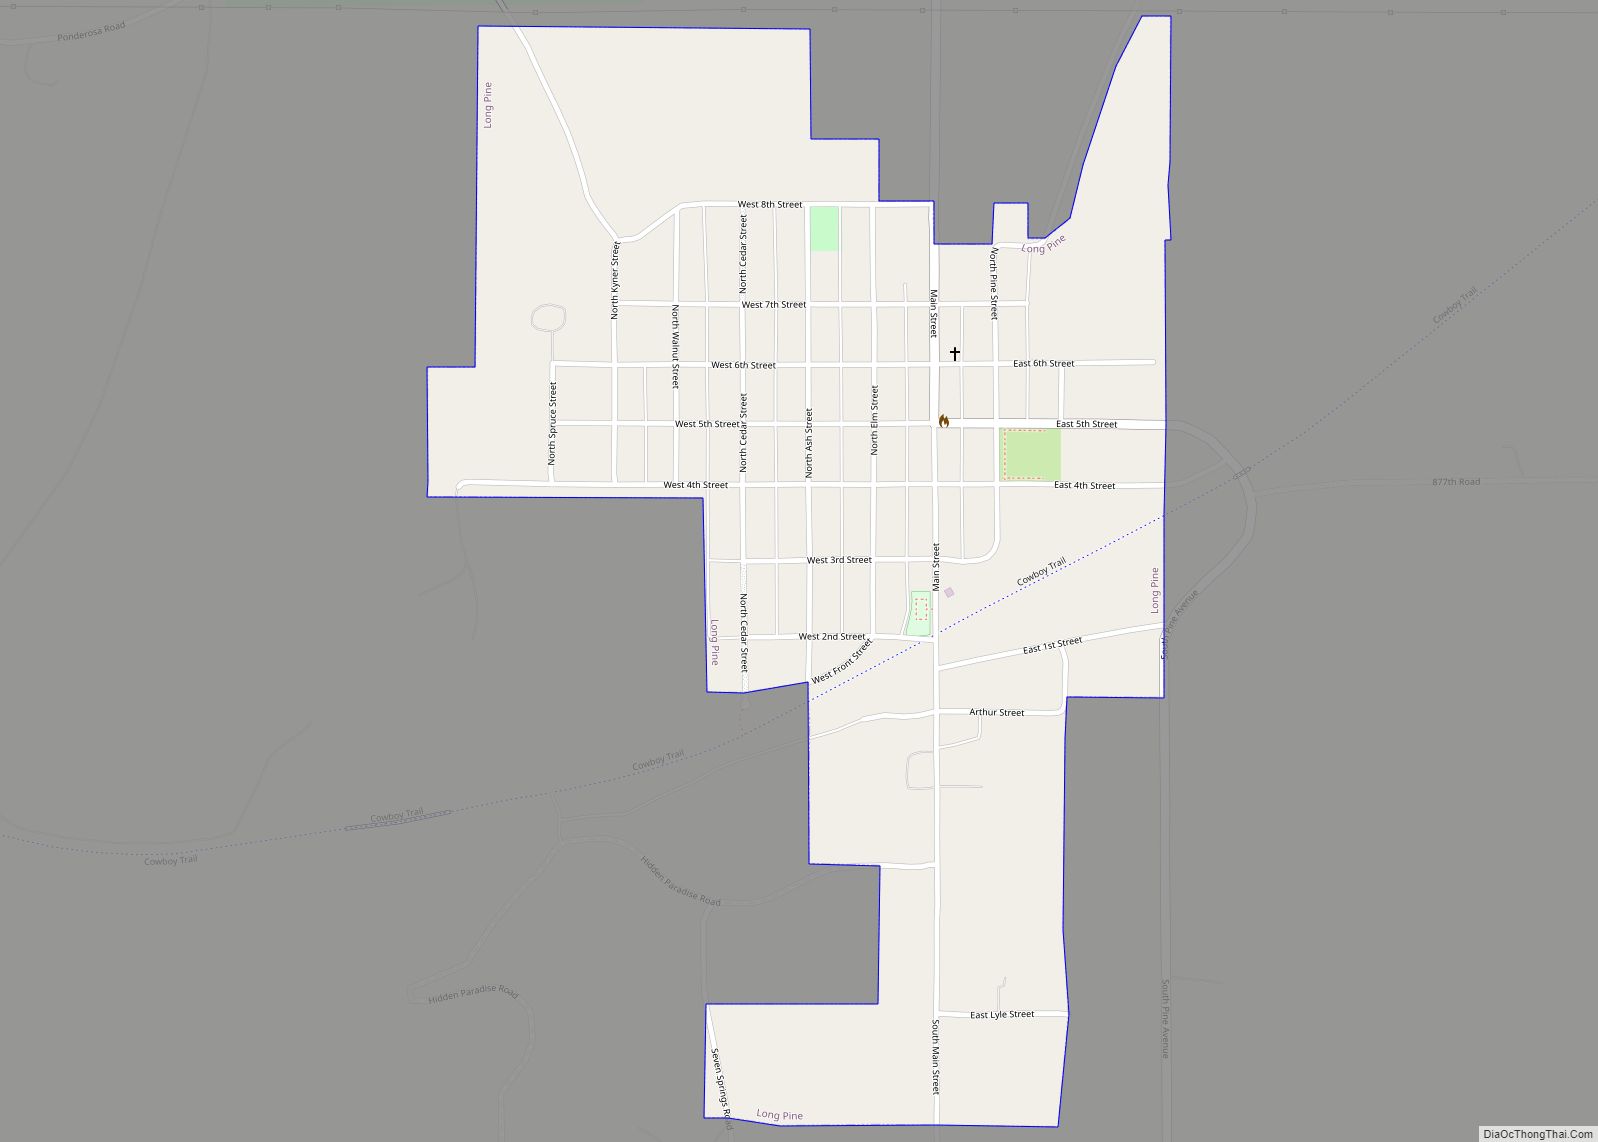 Map of Long Pine city